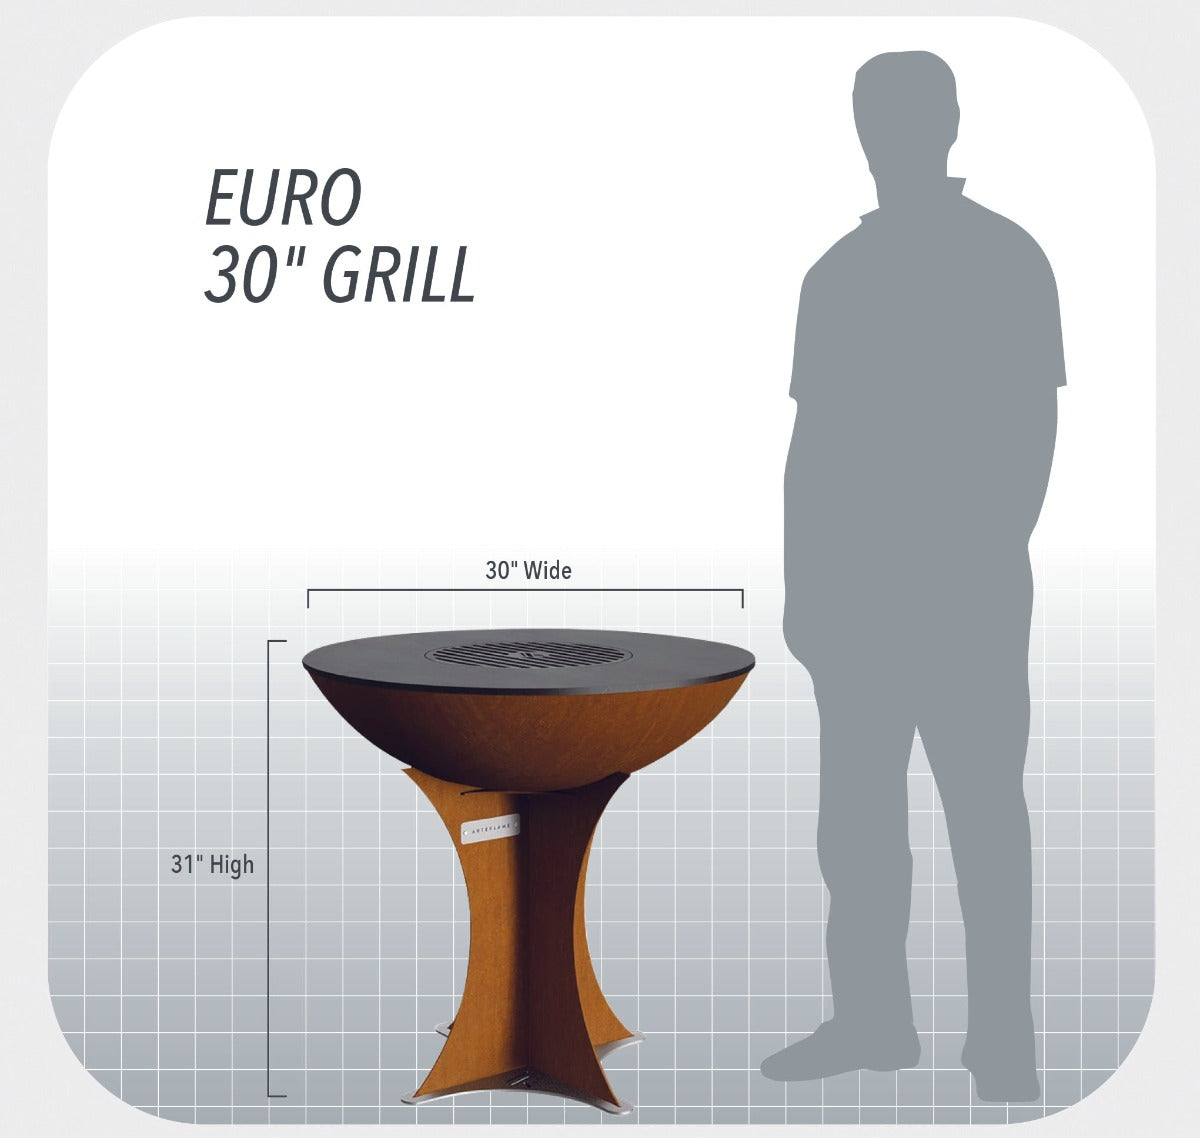  NEW!  Arteflame Classic 30" Grill - Tall Euro Base by Arteflame Arteflame Perfumarie